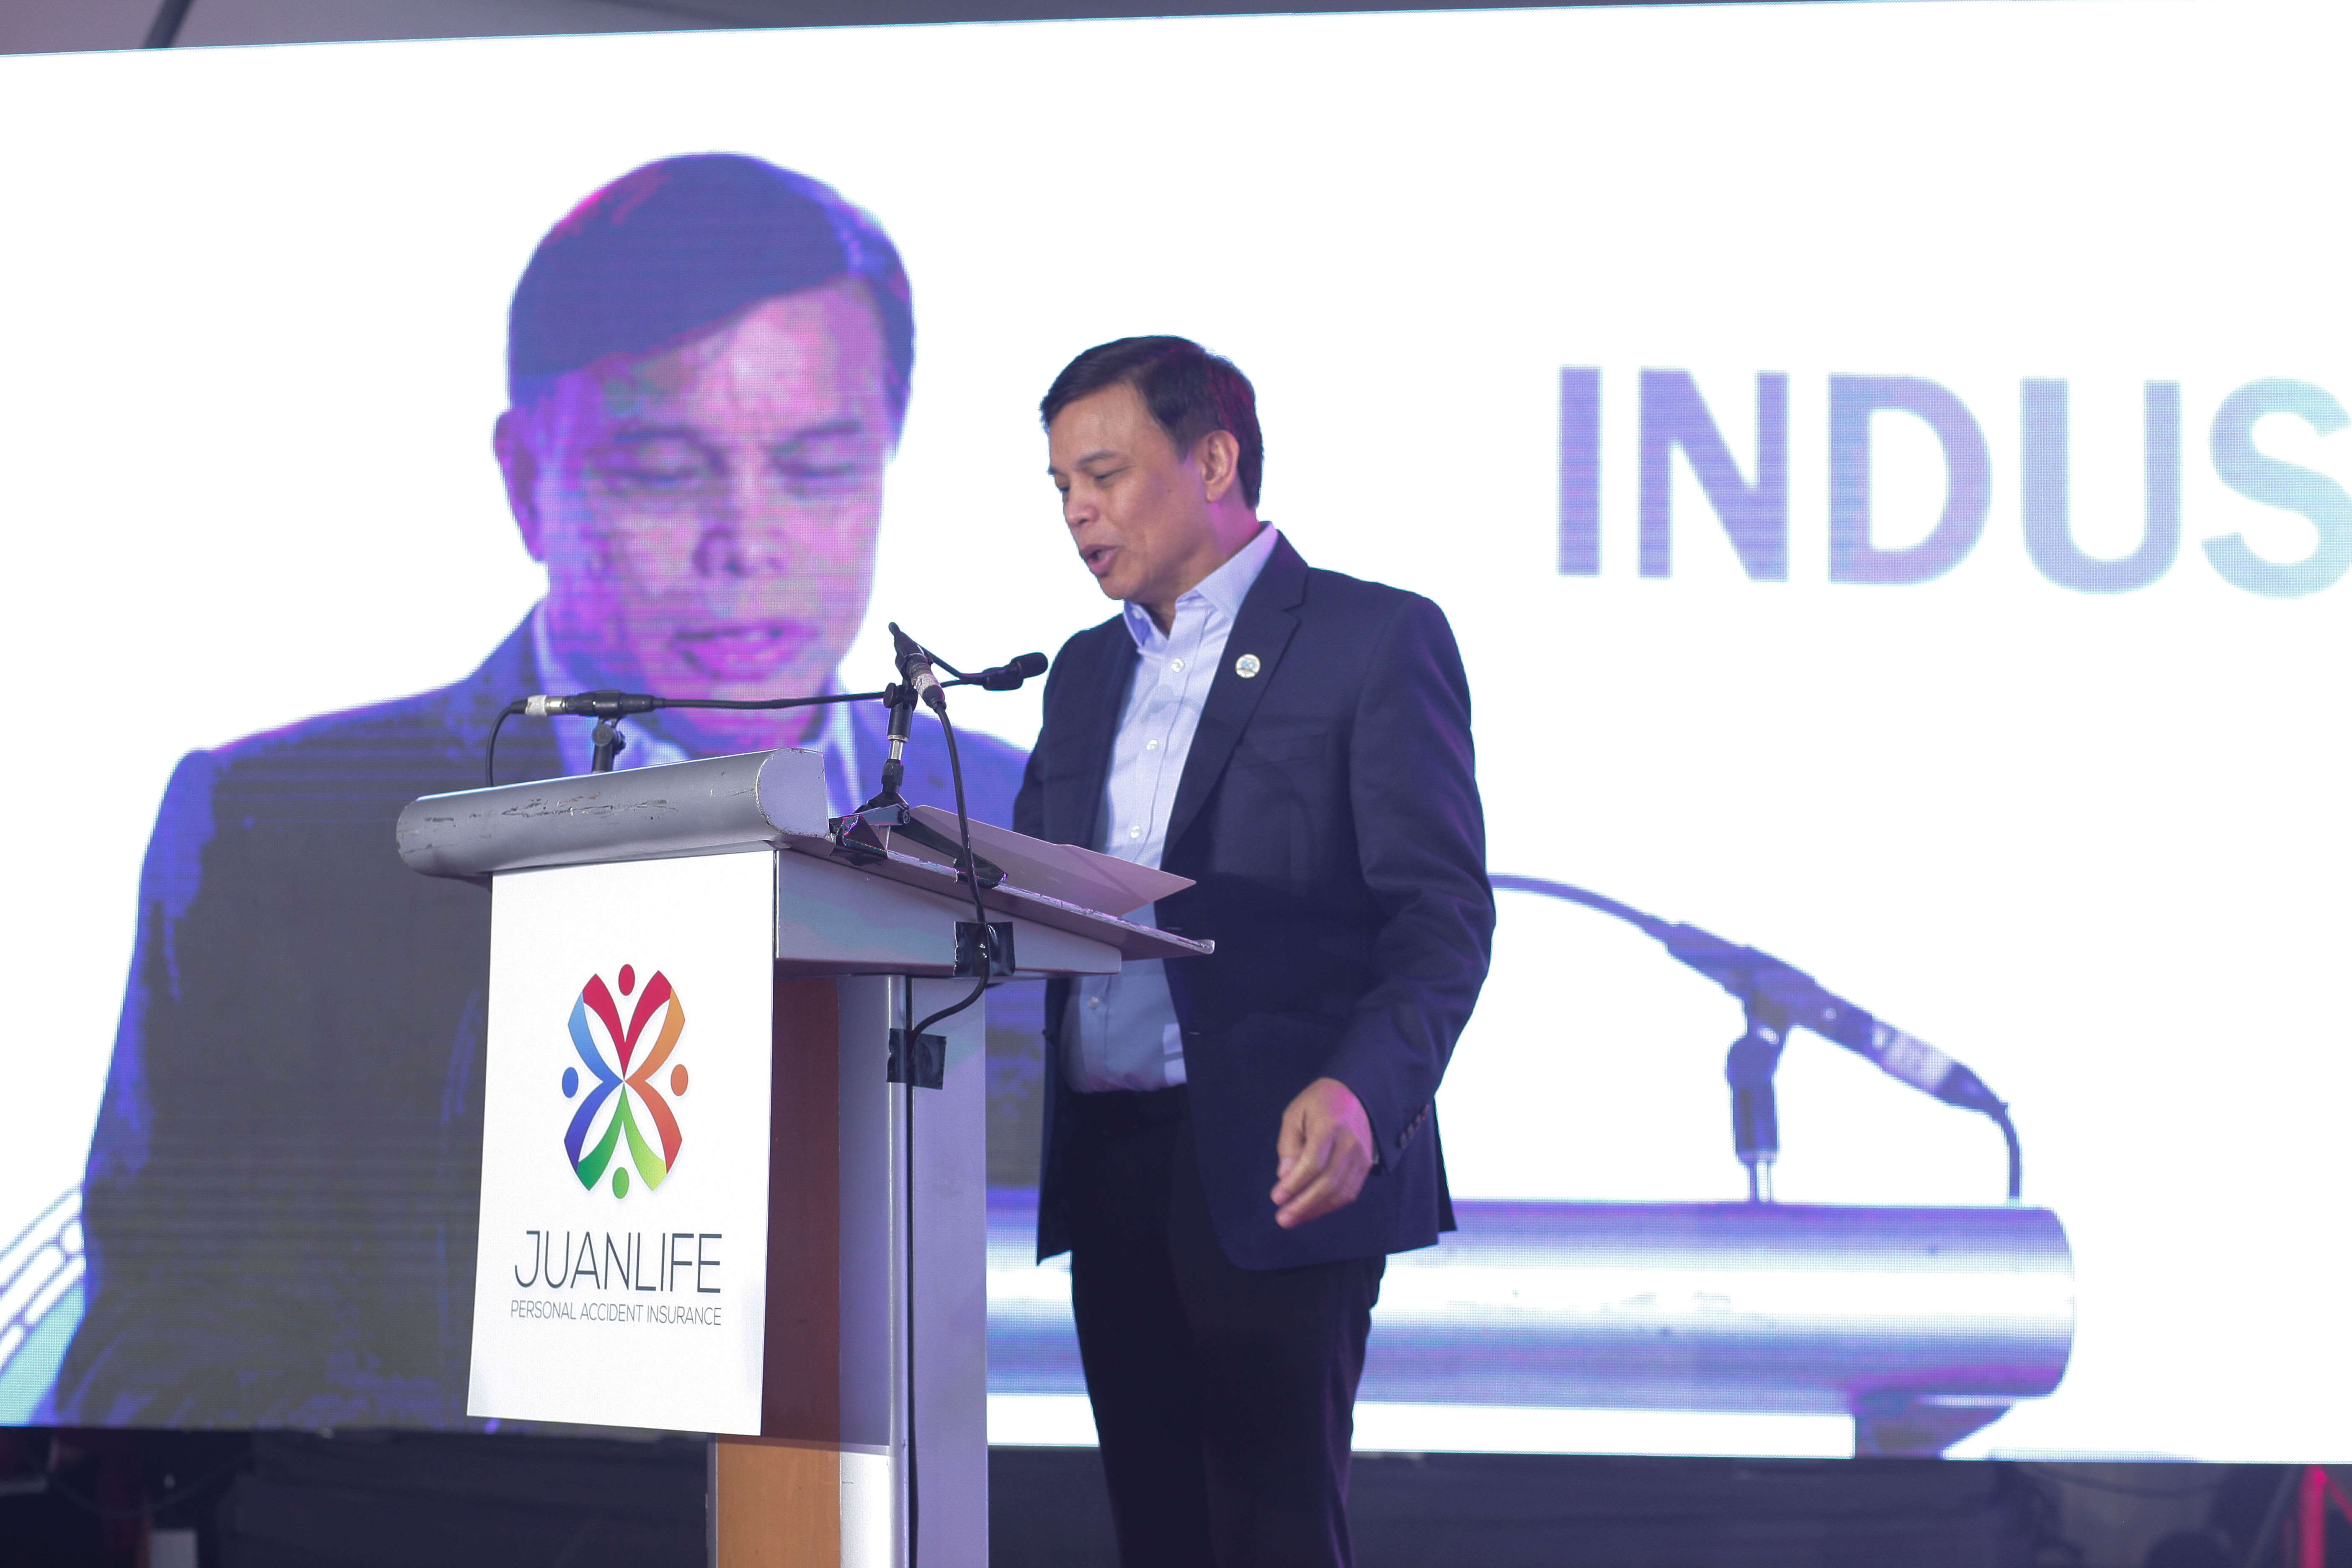 Juanlife Launch Speech By Mr Romulo Delos Reyes Jr President Of Stronghold Insurance Company Inc Juanlife